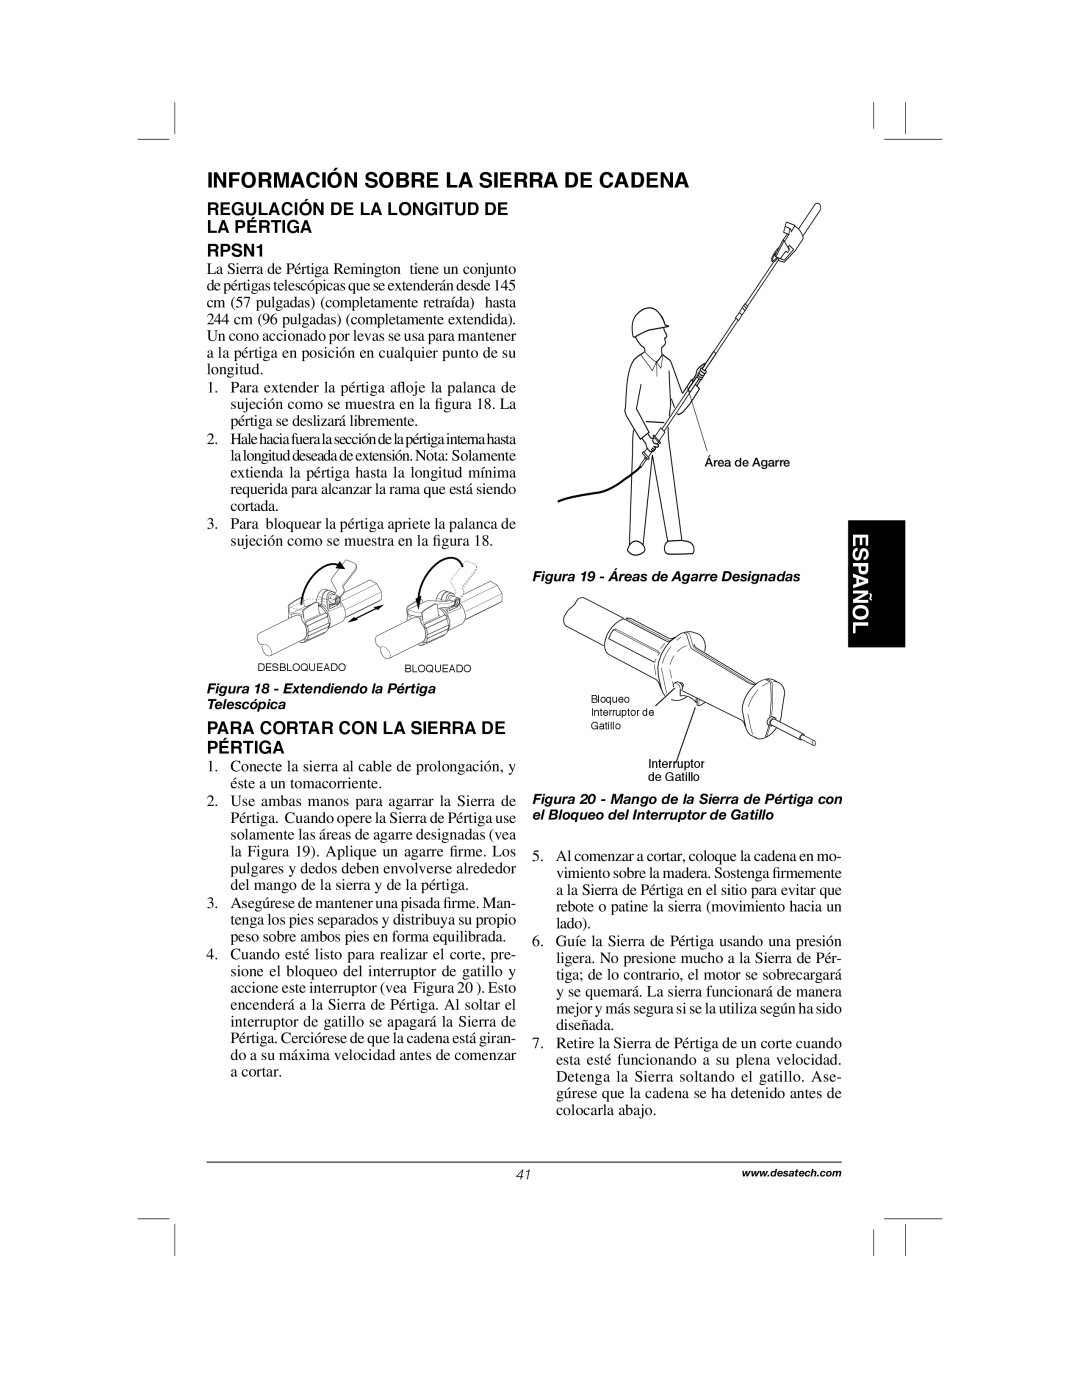 Remington Power Tools RPS2N1, 104317, PS1510A manual Información Sobre La Sierra De Cadena, Español, RPSN1 